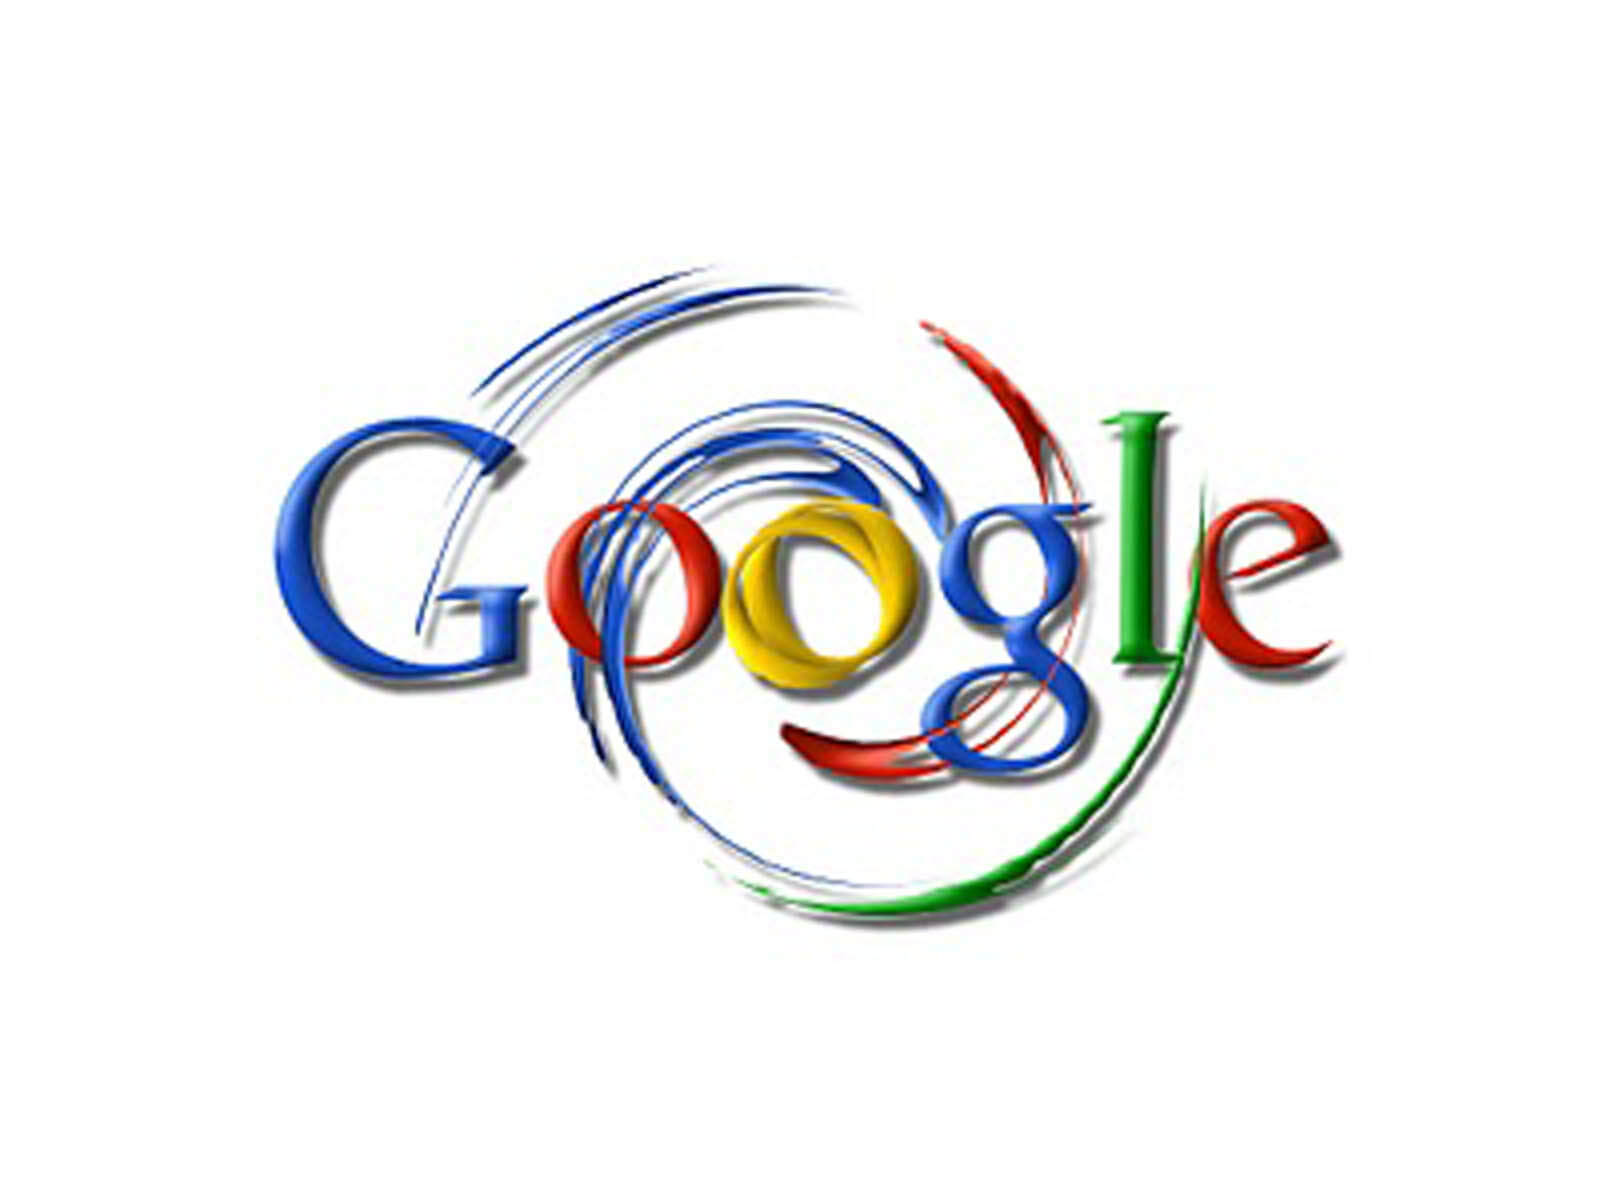 Google co. Гугл. Надпись гугл. Логотип гугл.